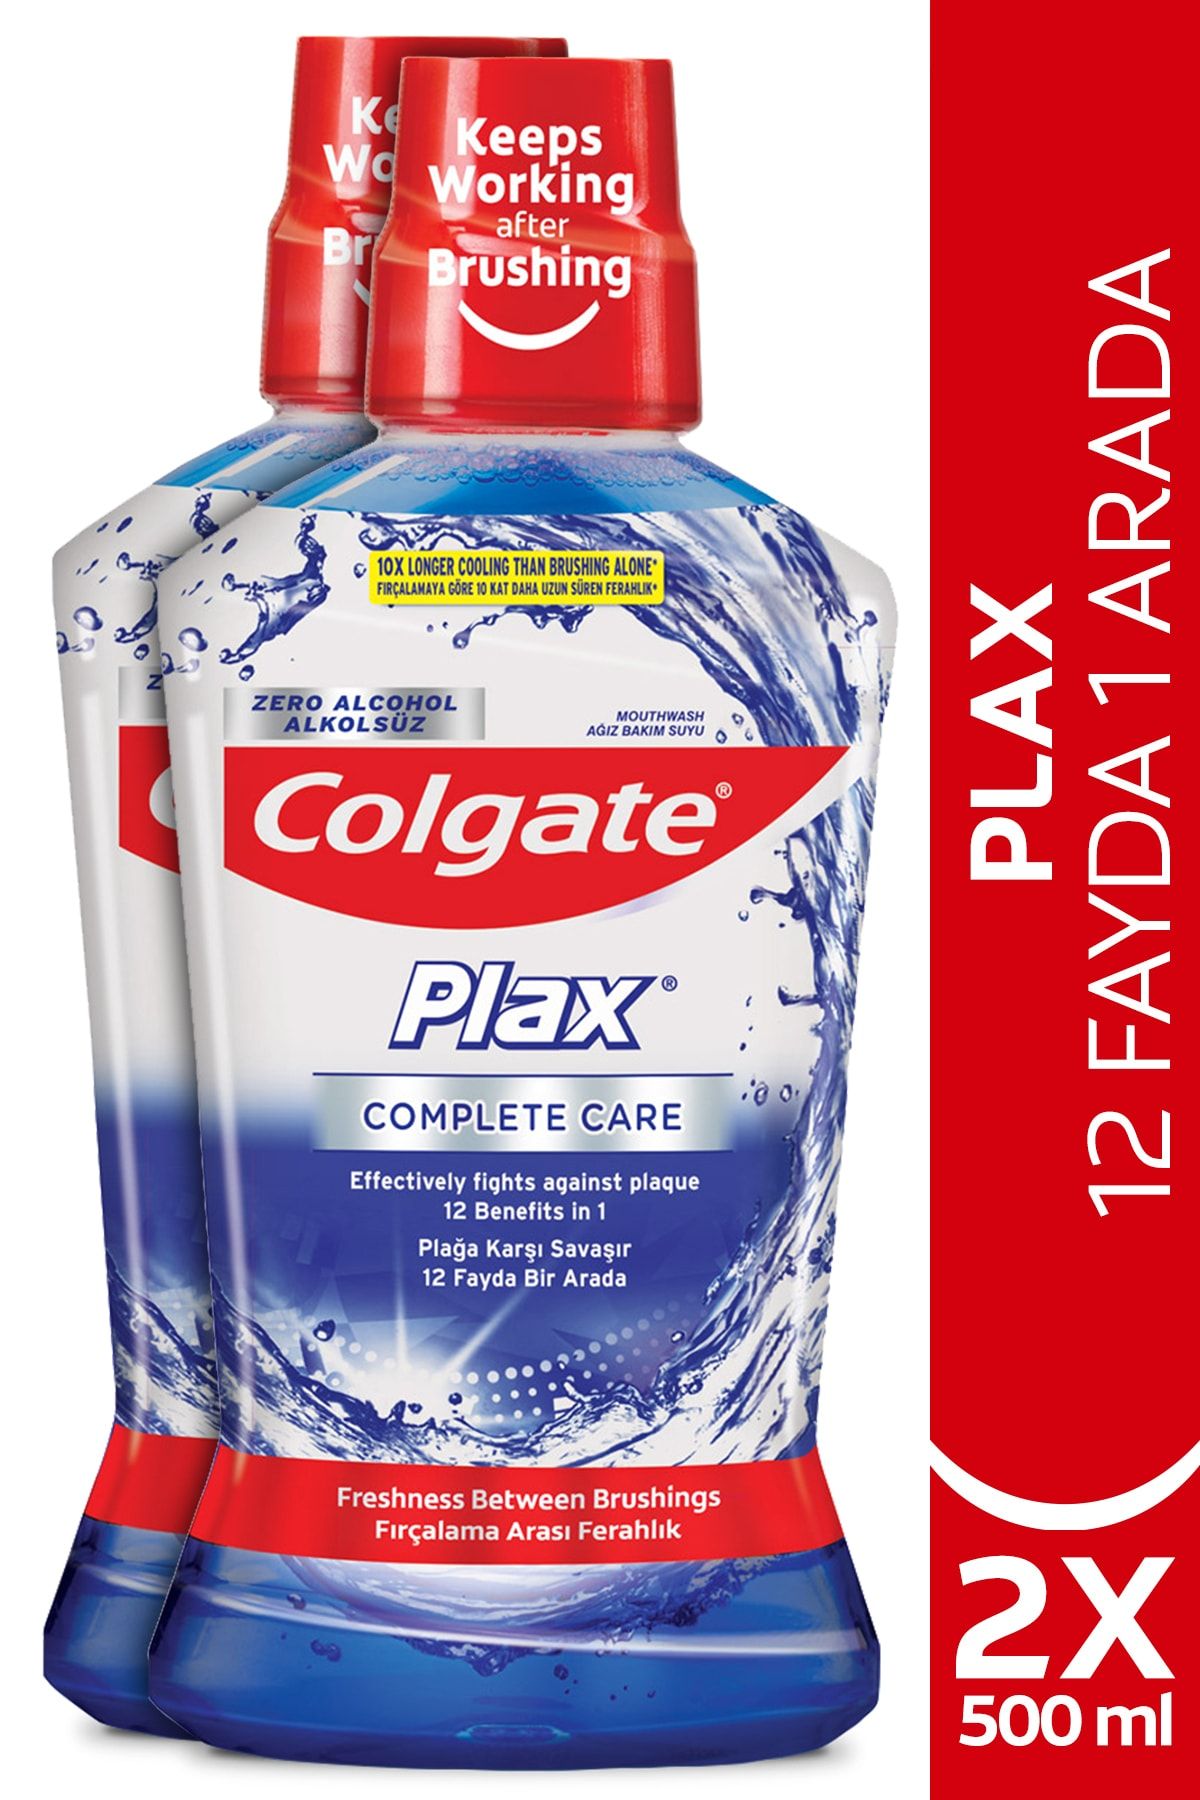 Colgate Plax Complete Care 12 Fayda 1 Arada Ağız Bakım Suyu 500 ml x 2 Adet